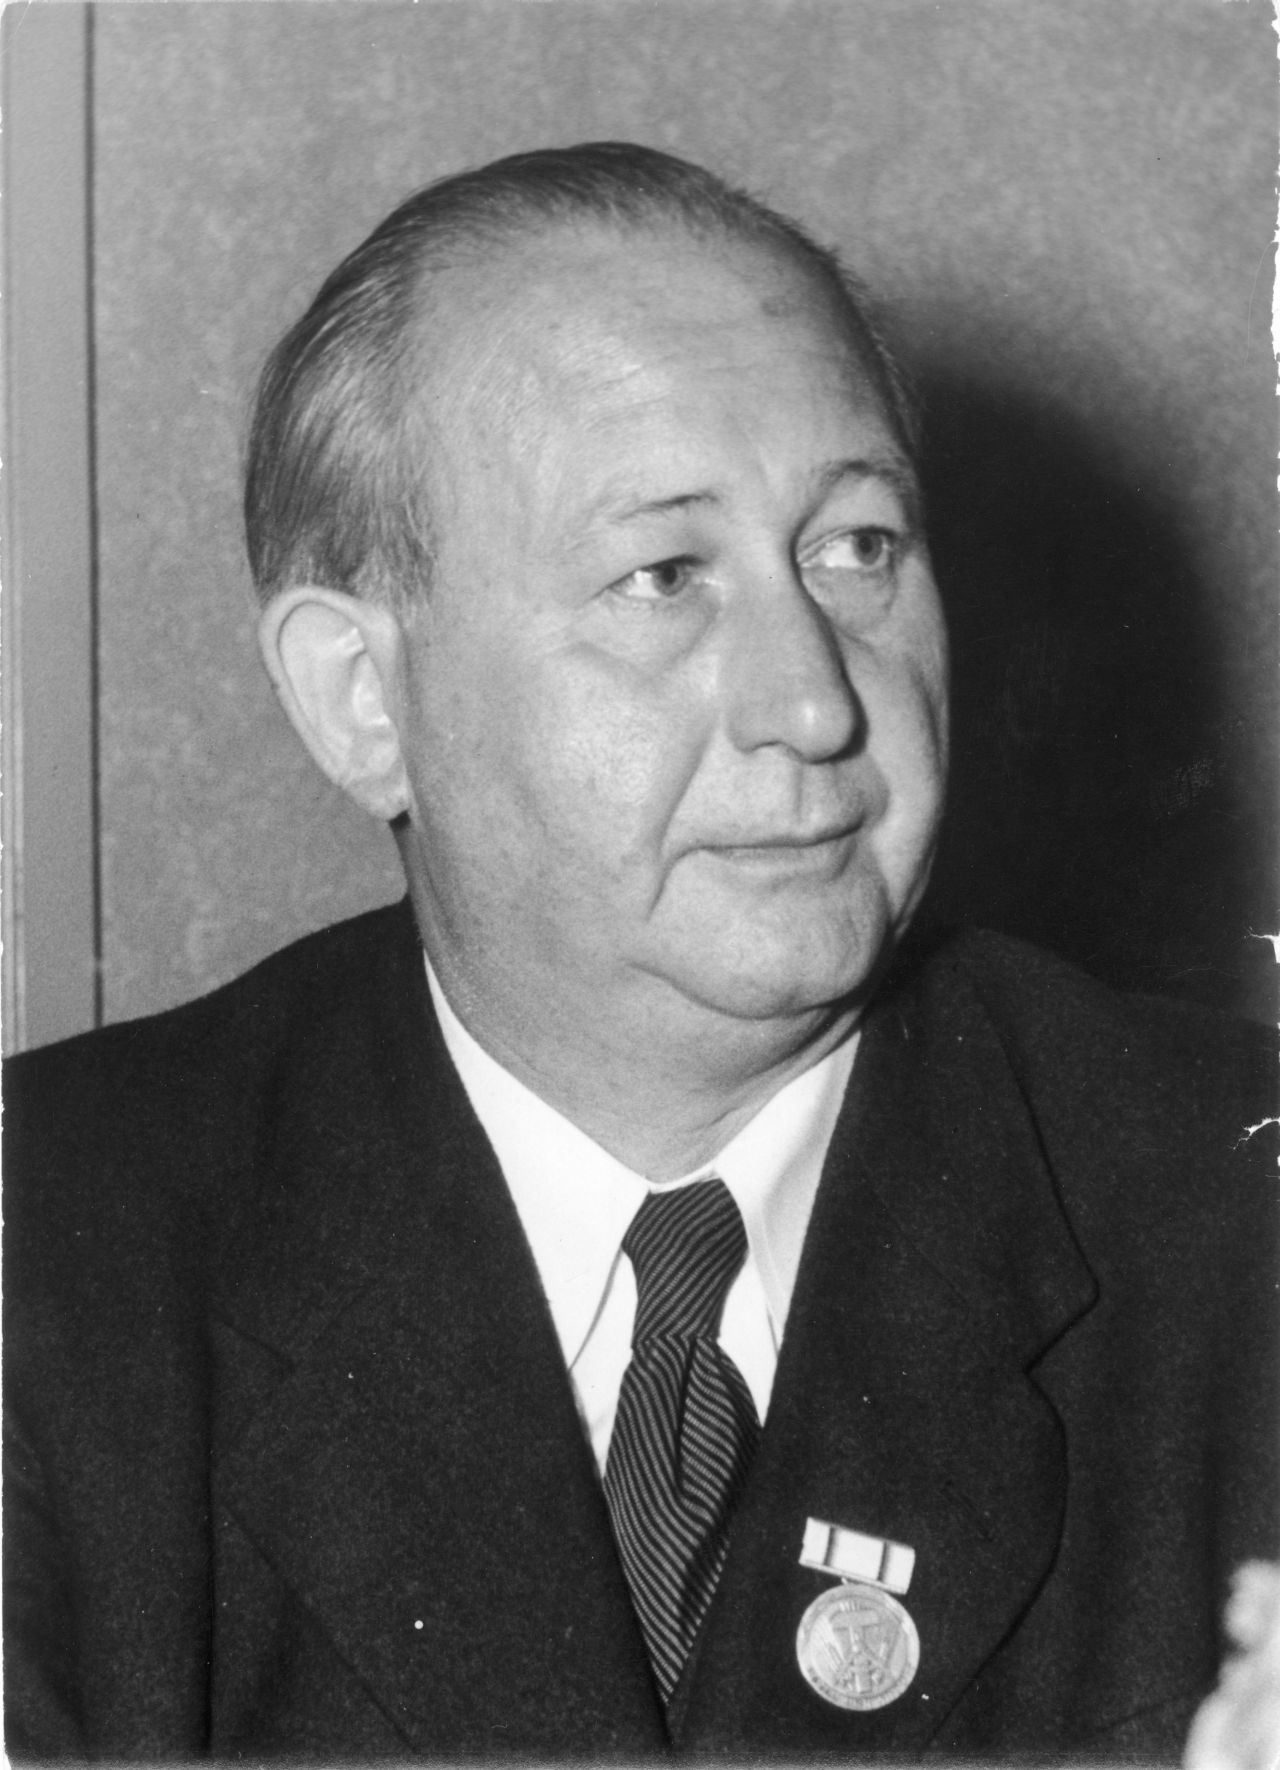 Porträtfoto des DDR-Politikers und Justizministers Max Fechner, 1952.